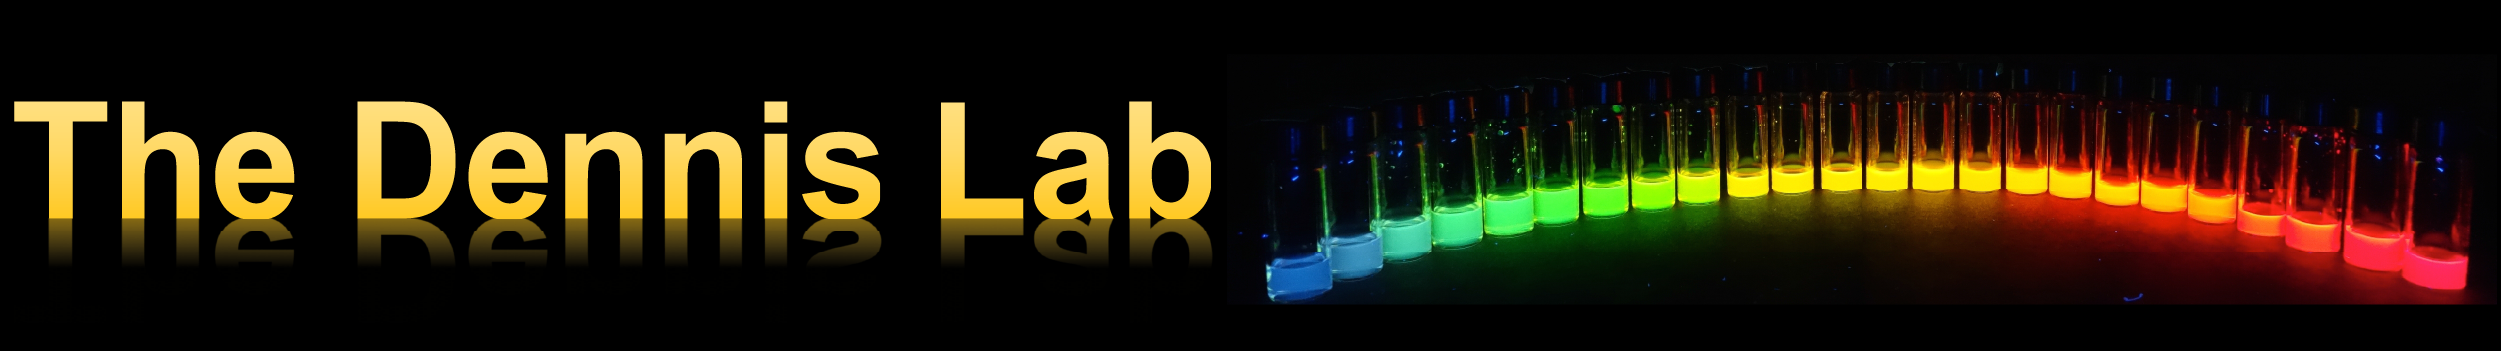 Dennis Lab Rainbow Image